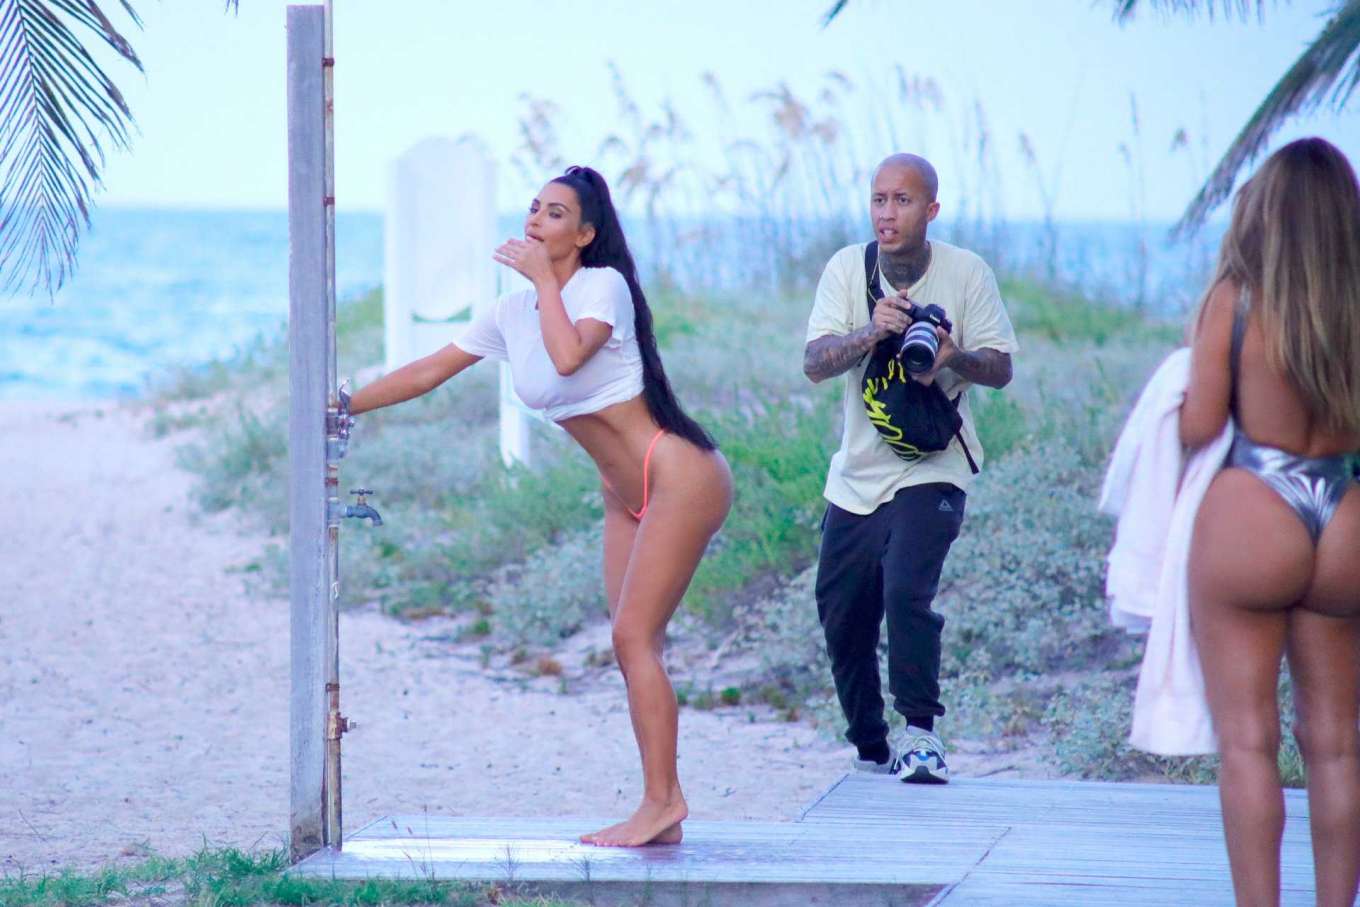 Kim Kardashian in Bikini â€“ Photoshoot at Beach in Miami